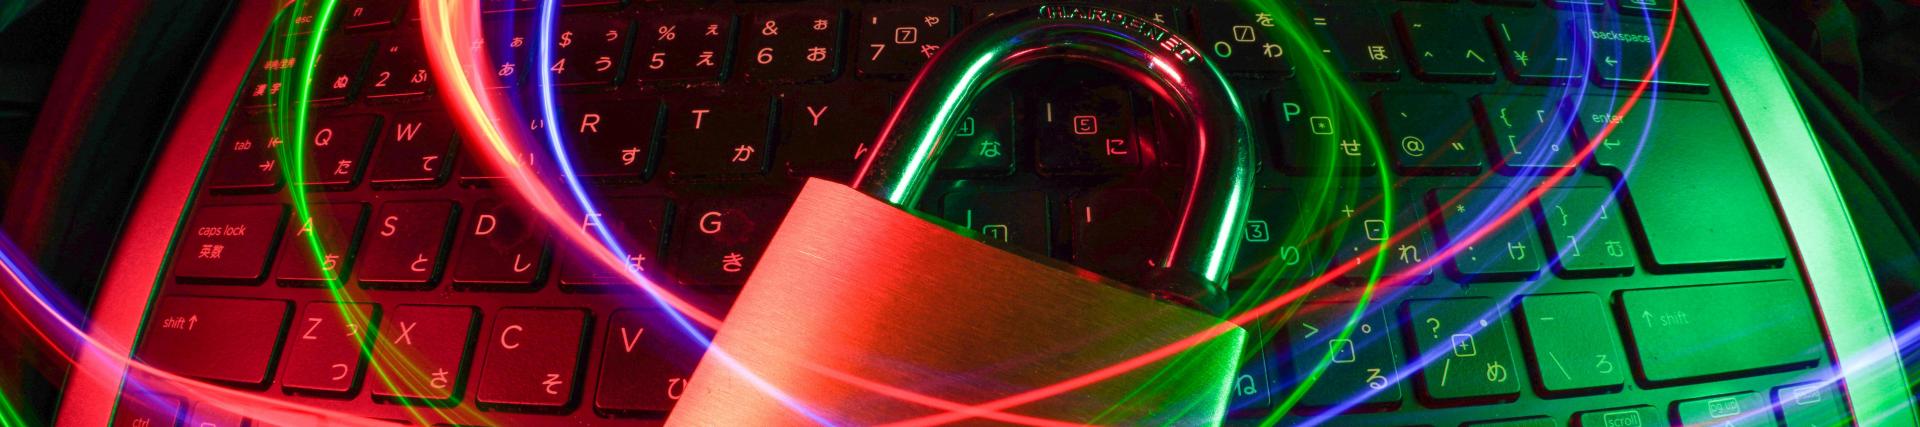 laptop lock cyber security